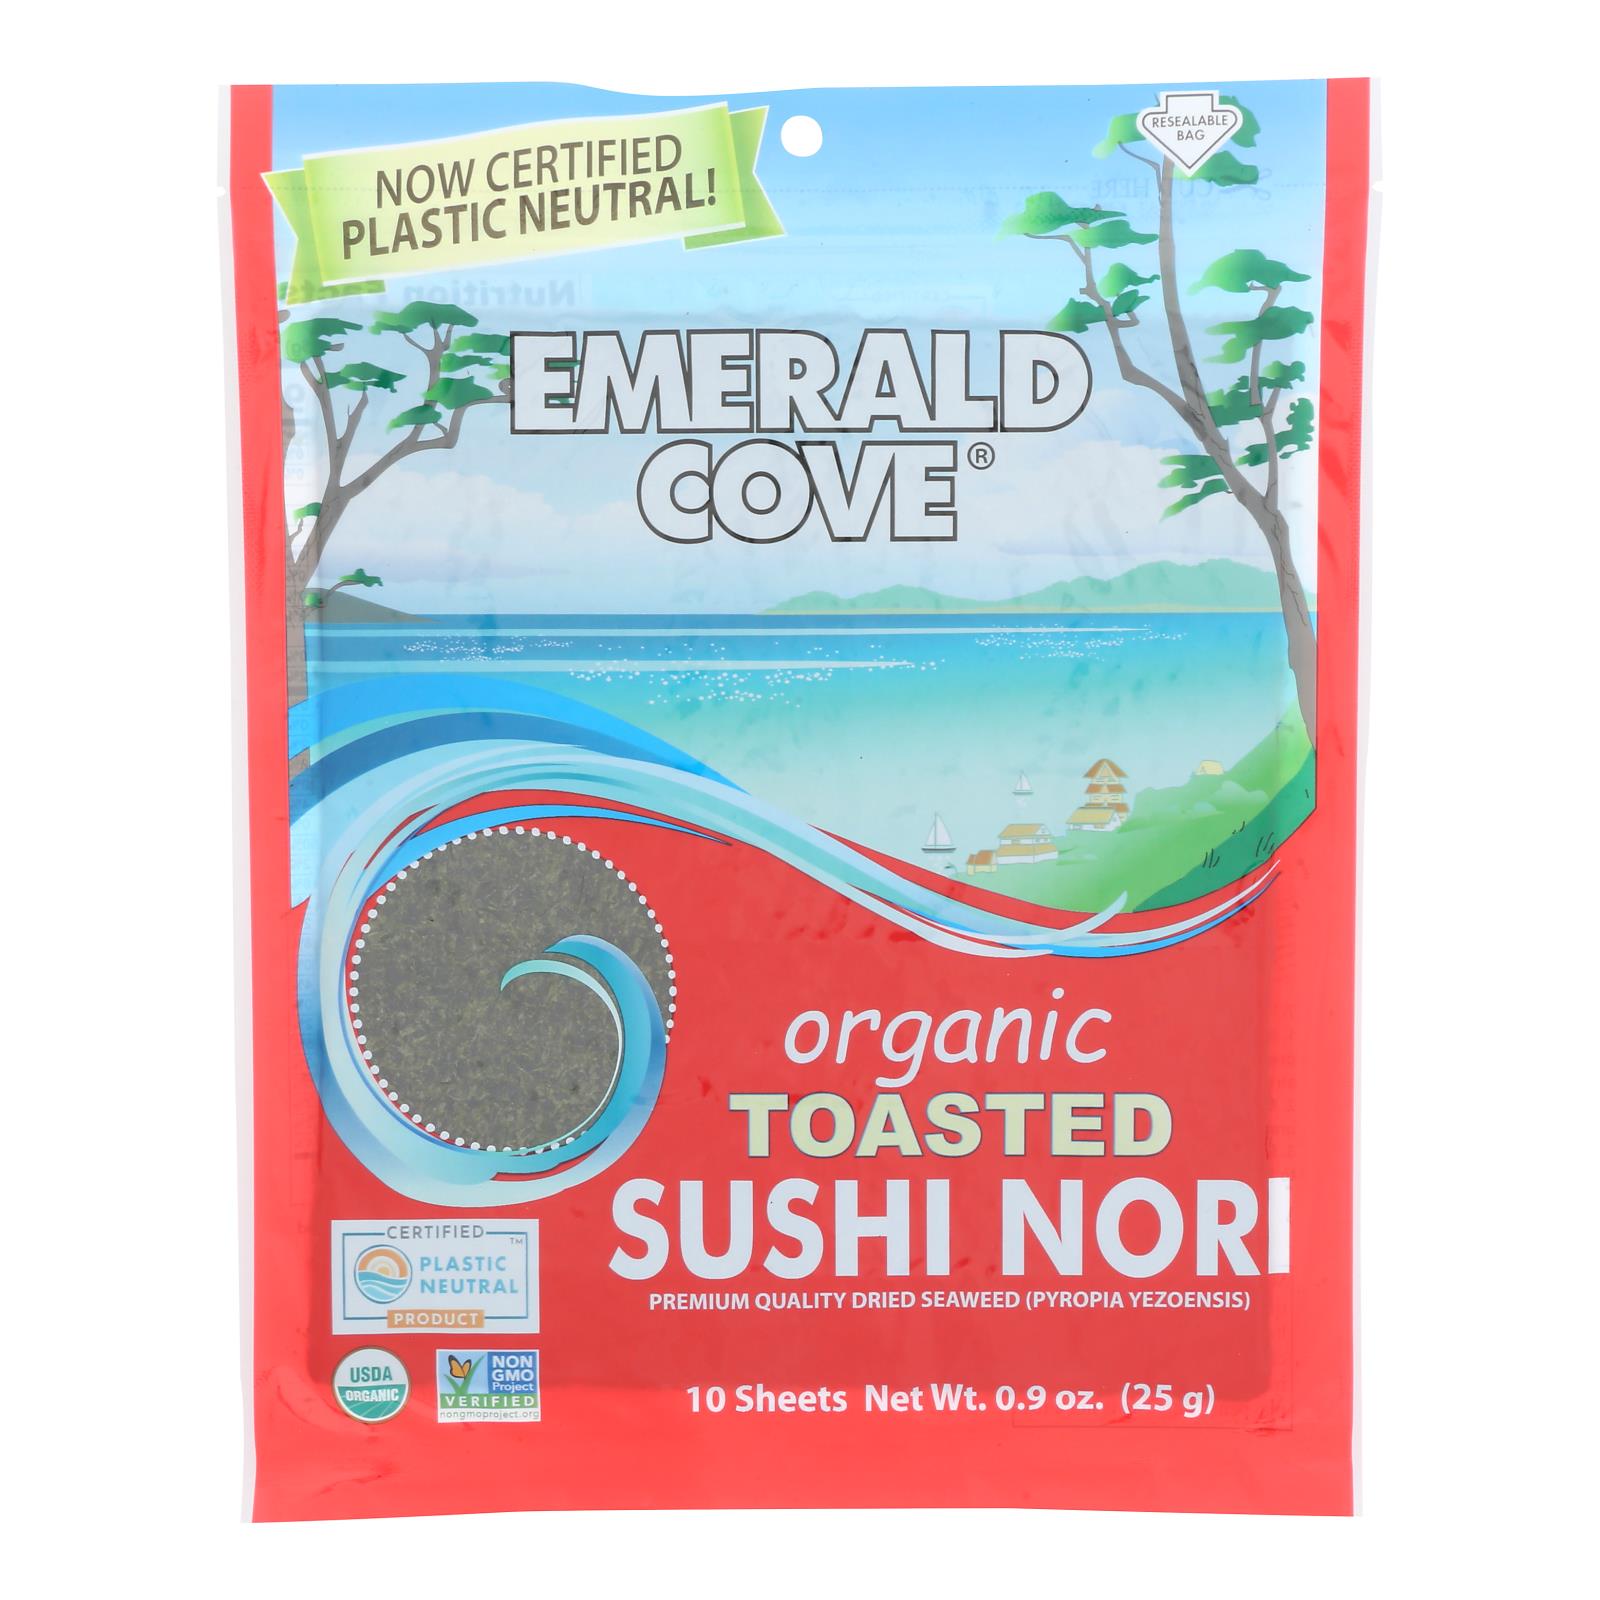 Emerald Cove Organic Pacific Sushi Nori - Toasted - Silver Grade - 10 Sheets - Case Of 6